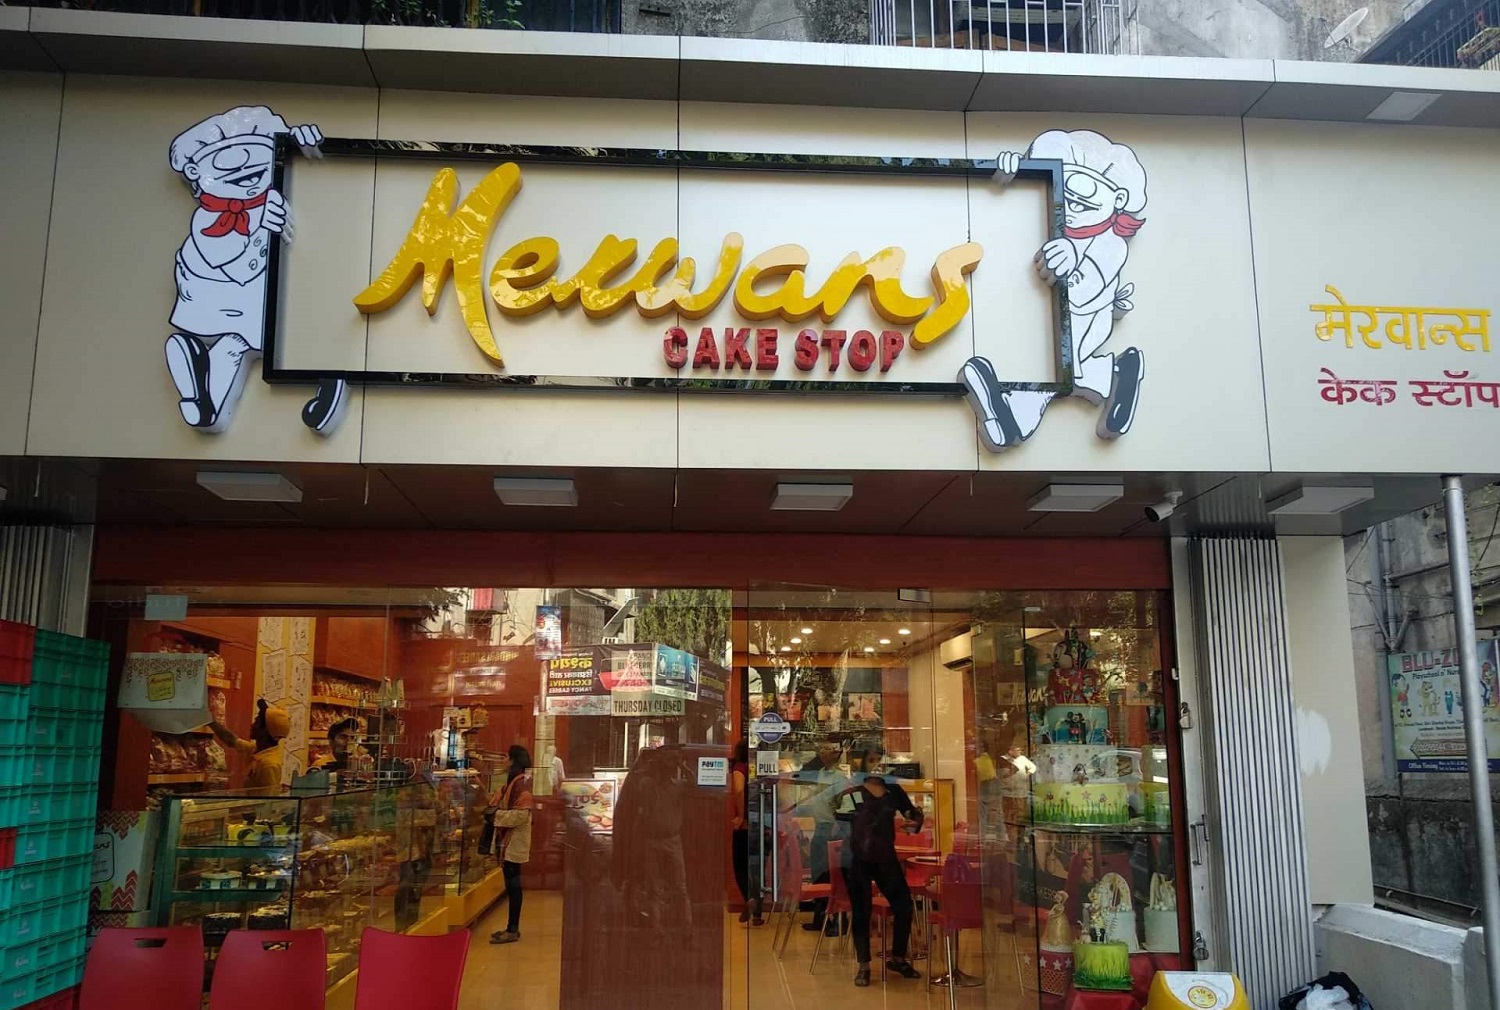 Menu of Merwans Cake Stop, Near Andheri West Station, Mumbai